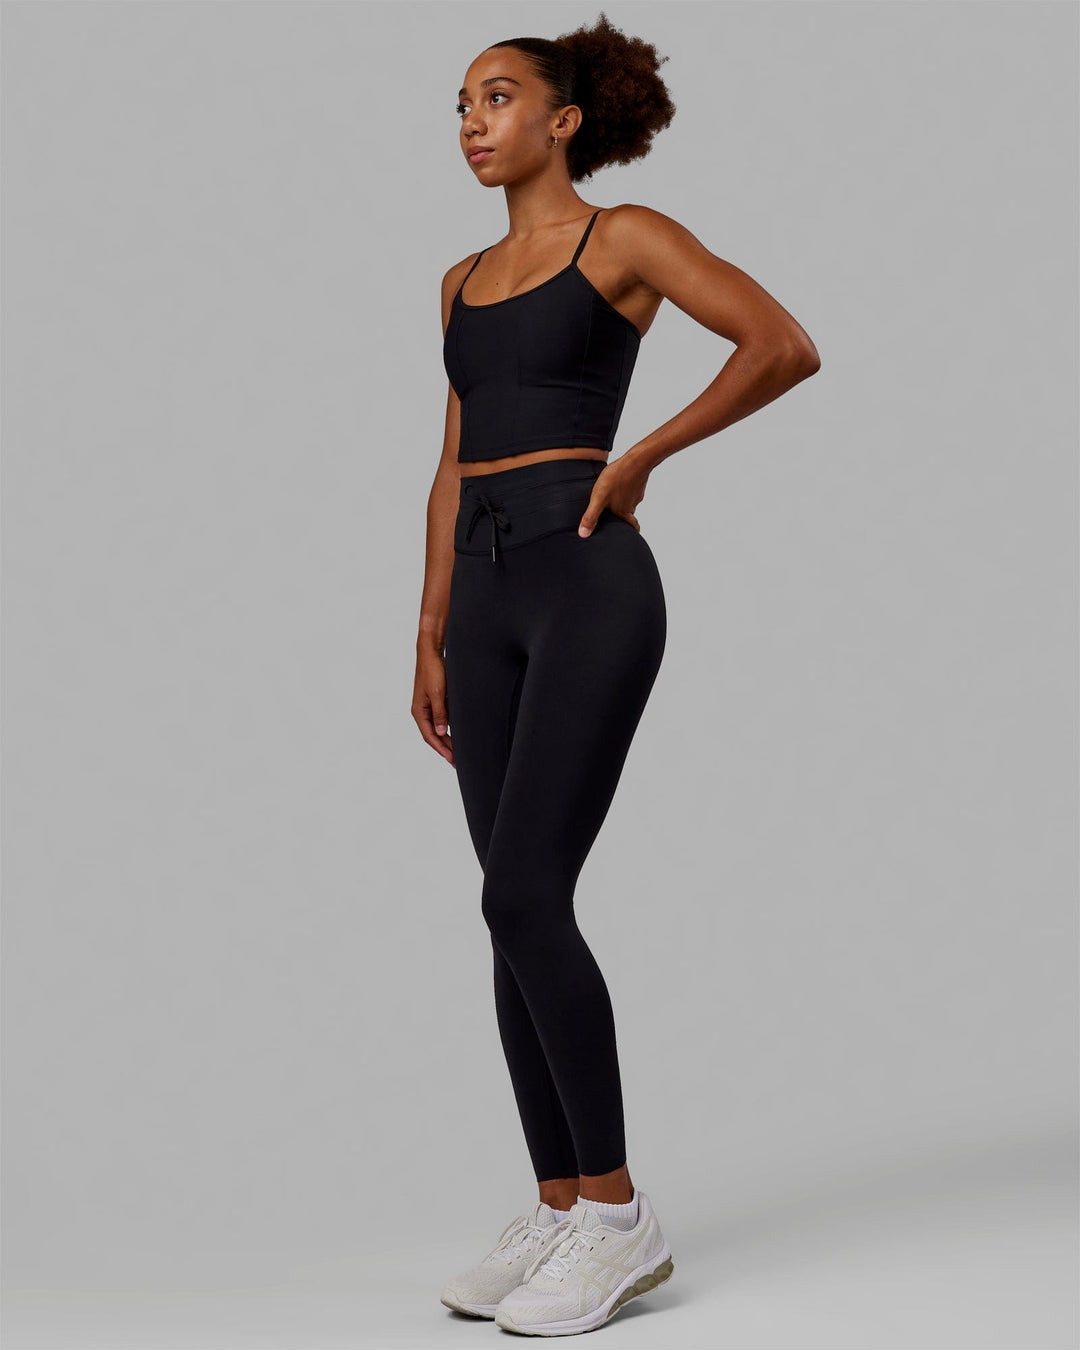 Woman wearing Resistance Full Length Leggings - Black